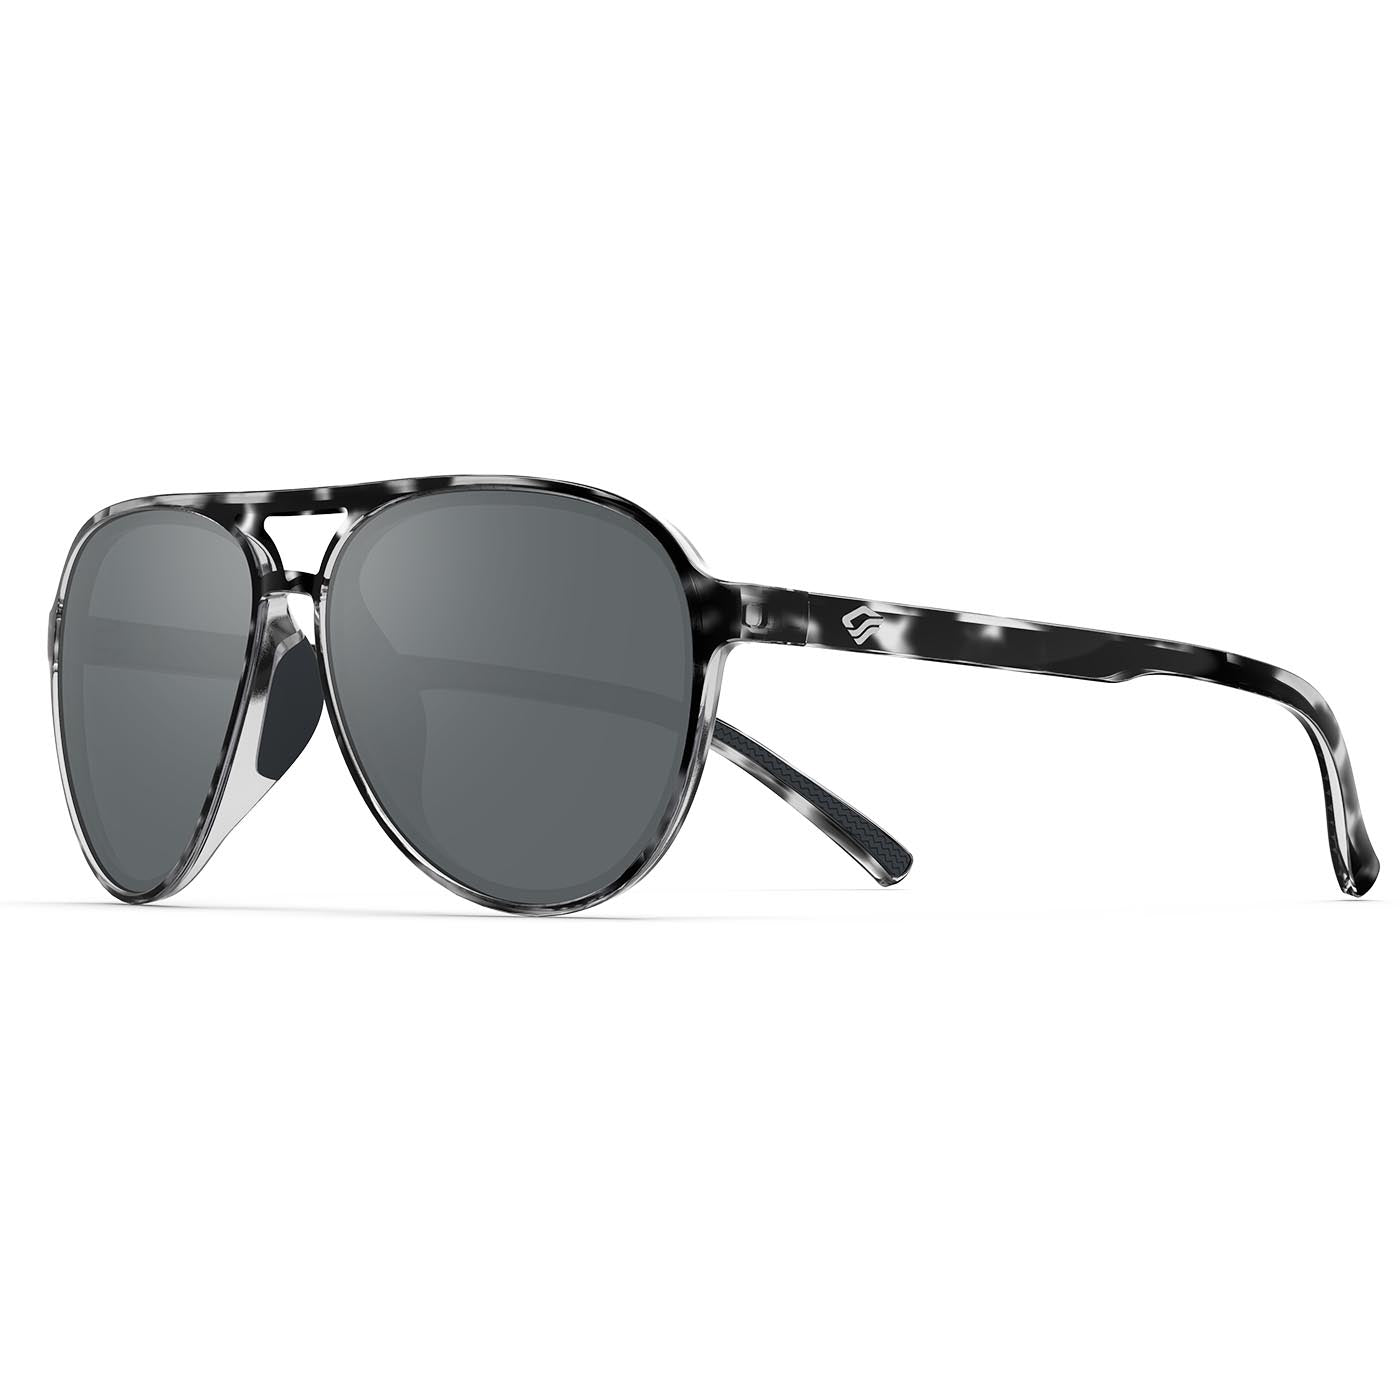 Torege 'Black Hills' Polarized Aviator Sunglasses for Men & Women - Stylish Sports Glasses for Fishing, Boating, Beach, Golf, Running & Driving